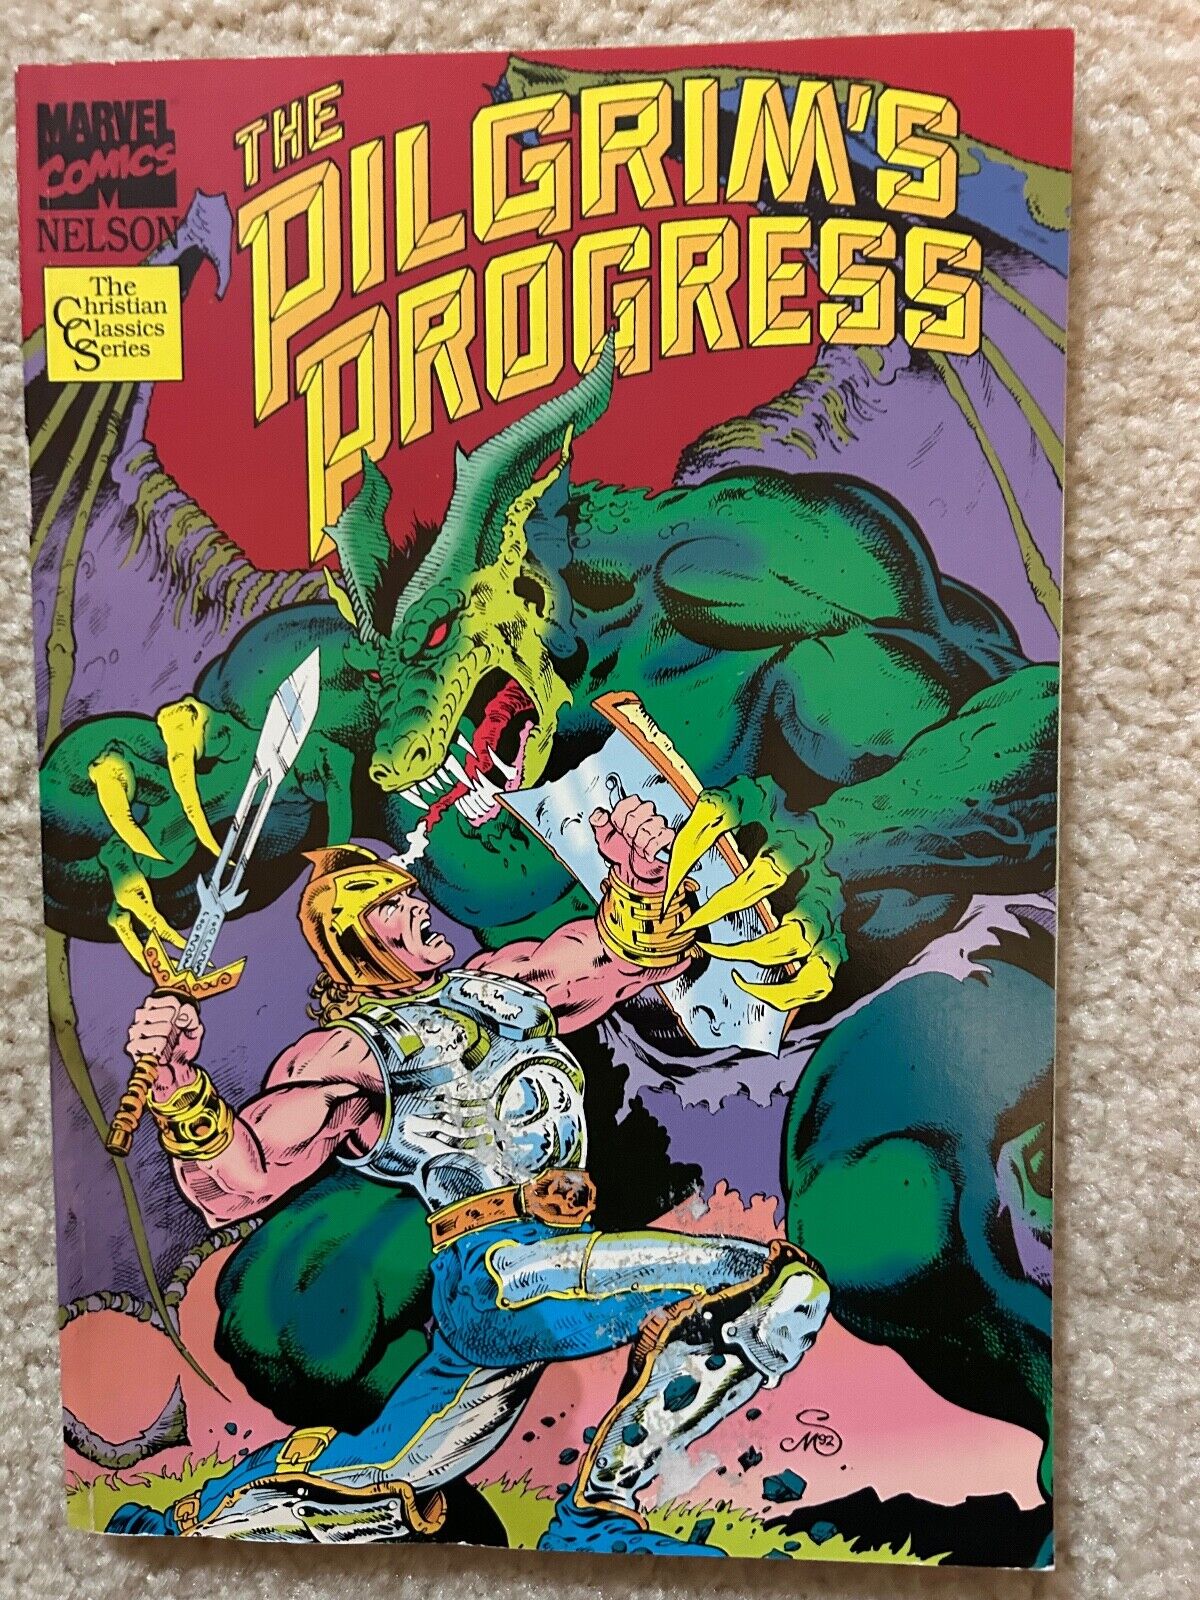 The Pilgrim’s Progress (Christian Classics Series) - Marvel Comics TPB Paperback